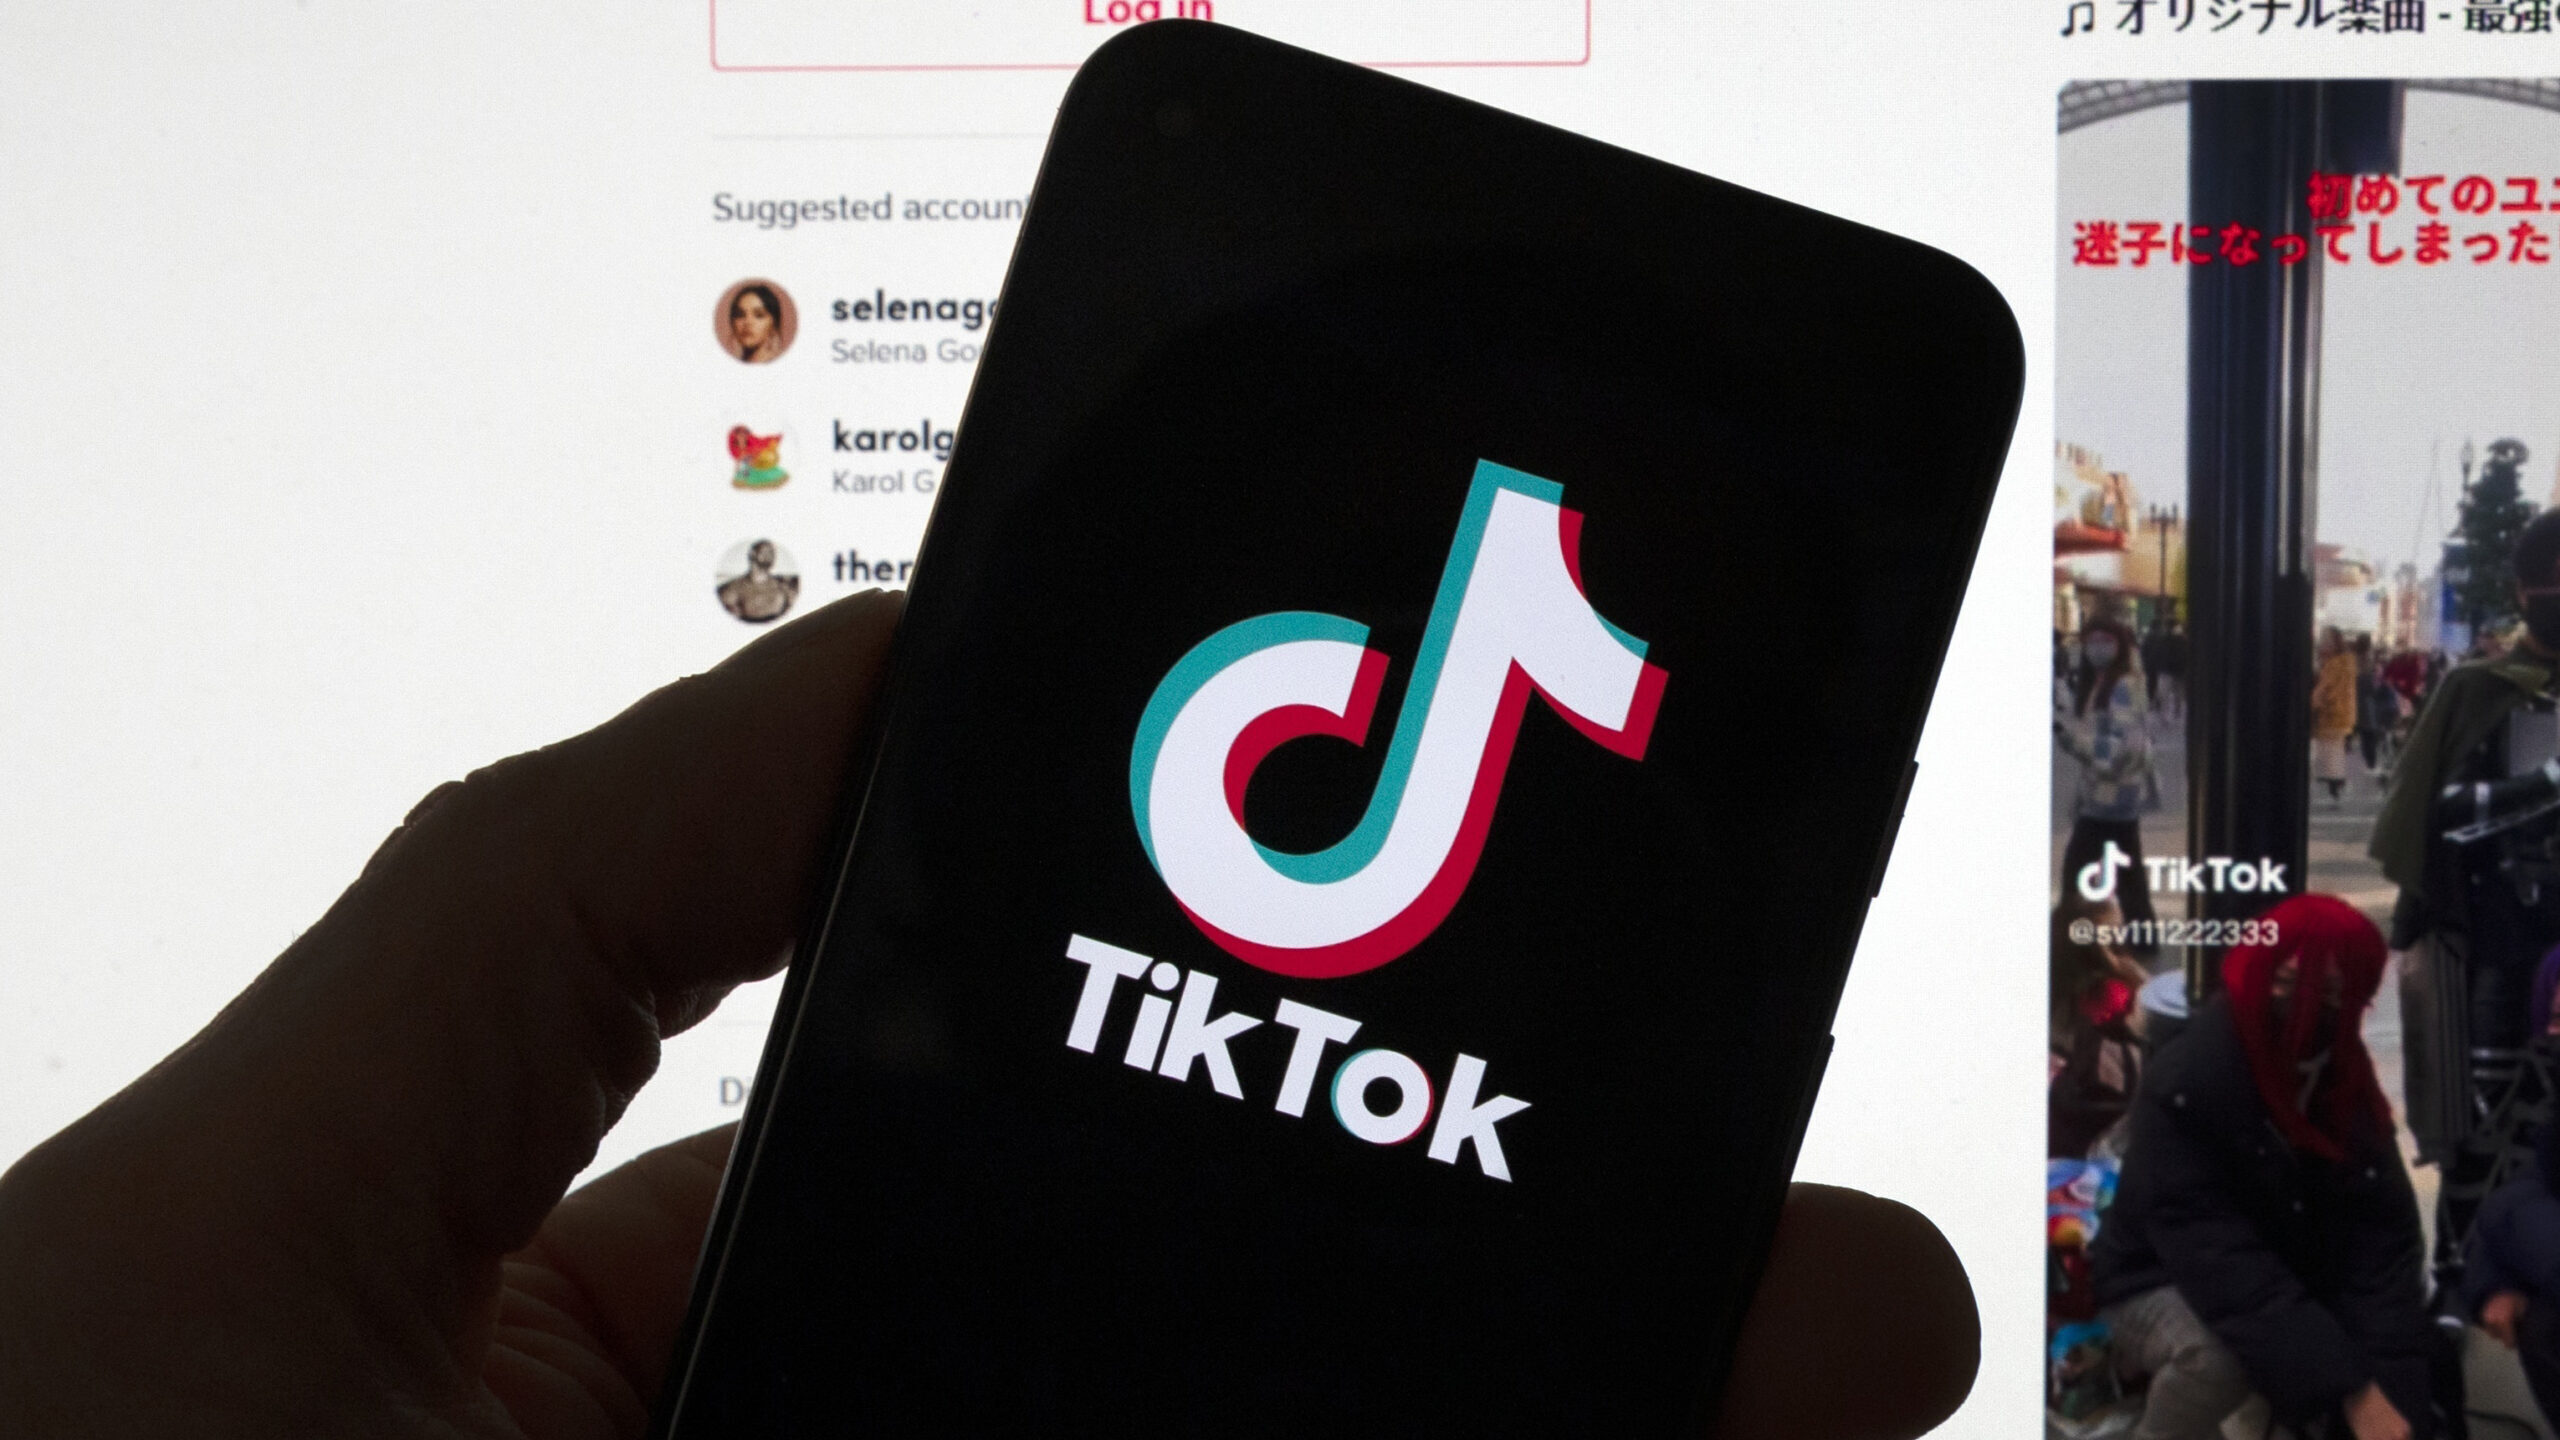 tiktok logo is shown, kids' social media use is under scrutiny from health officials...